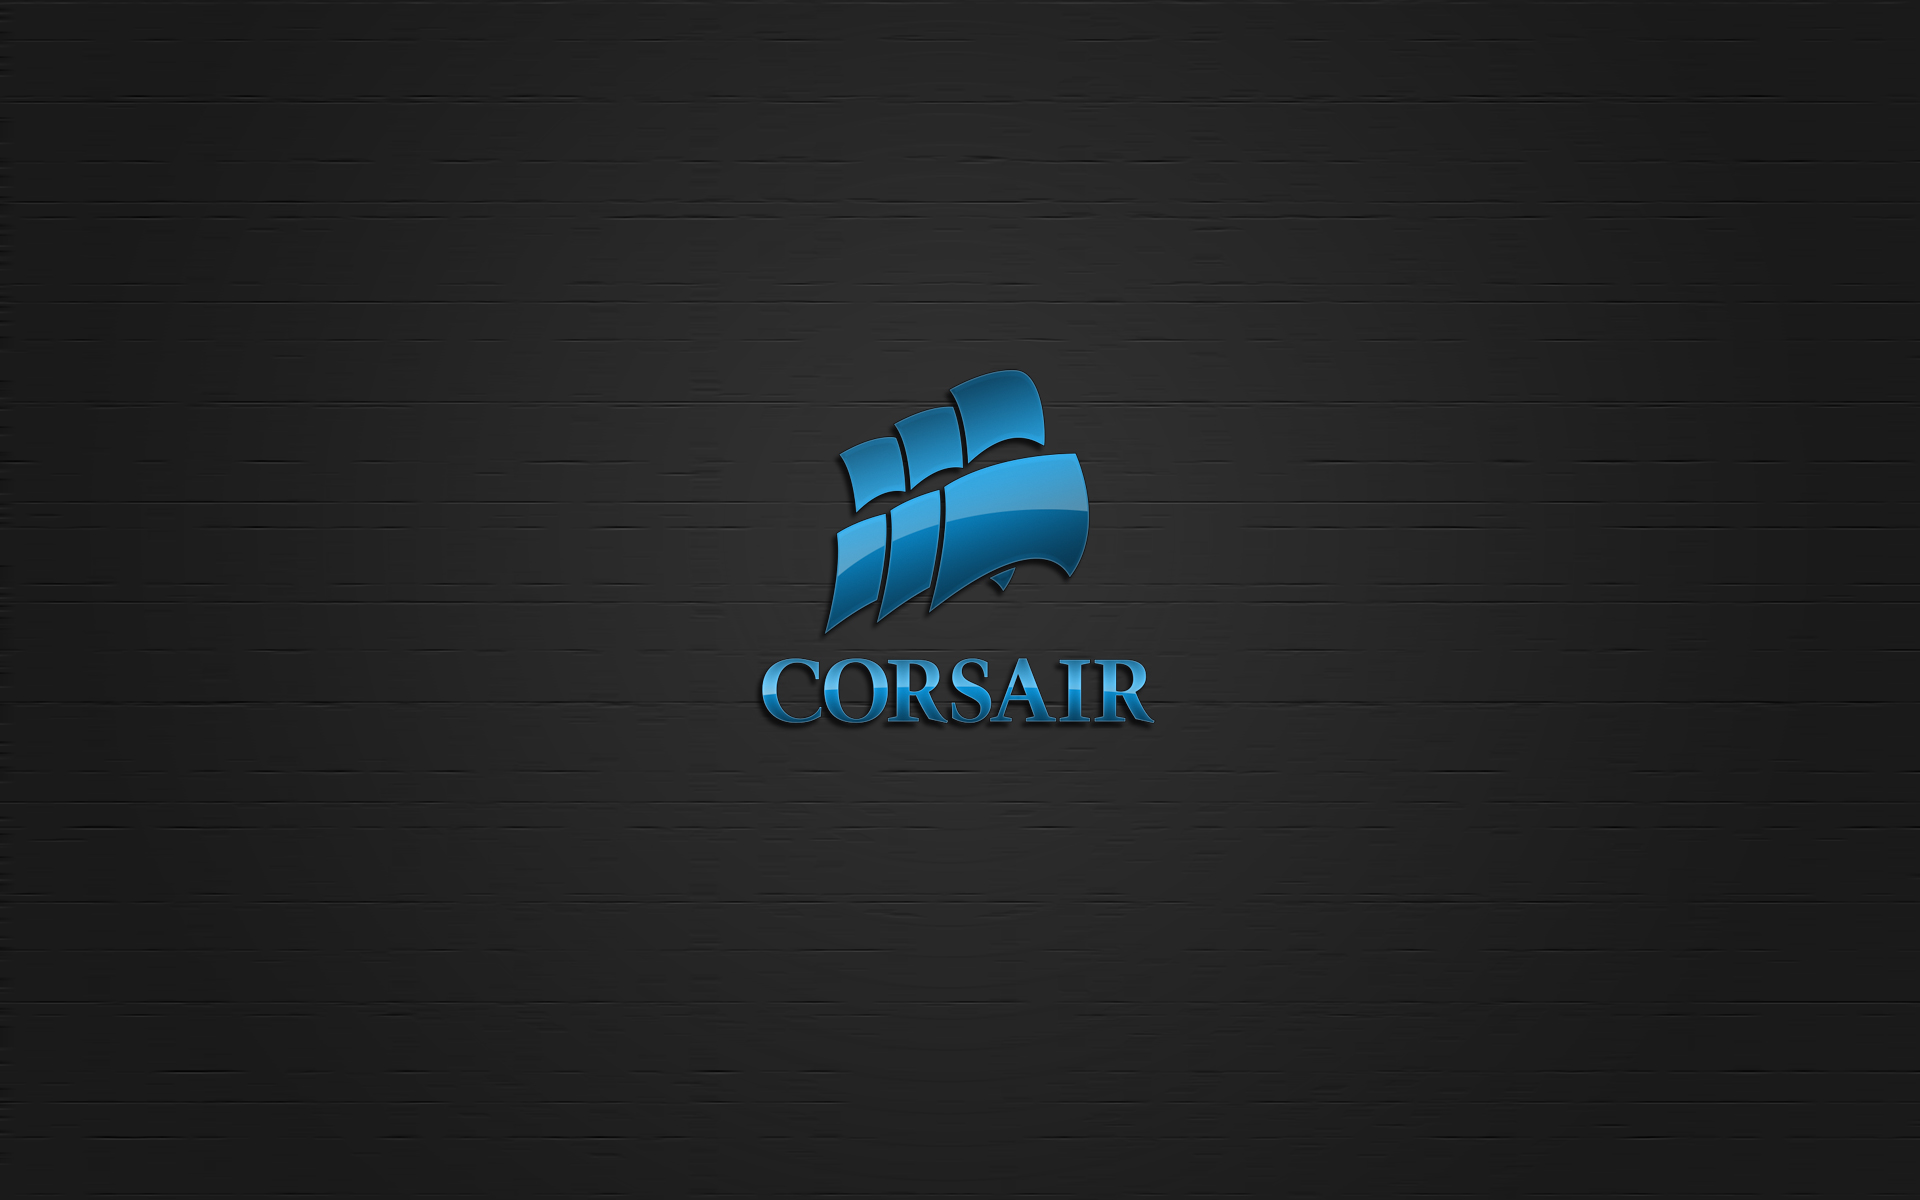 Corsair2 Jpg 304kb